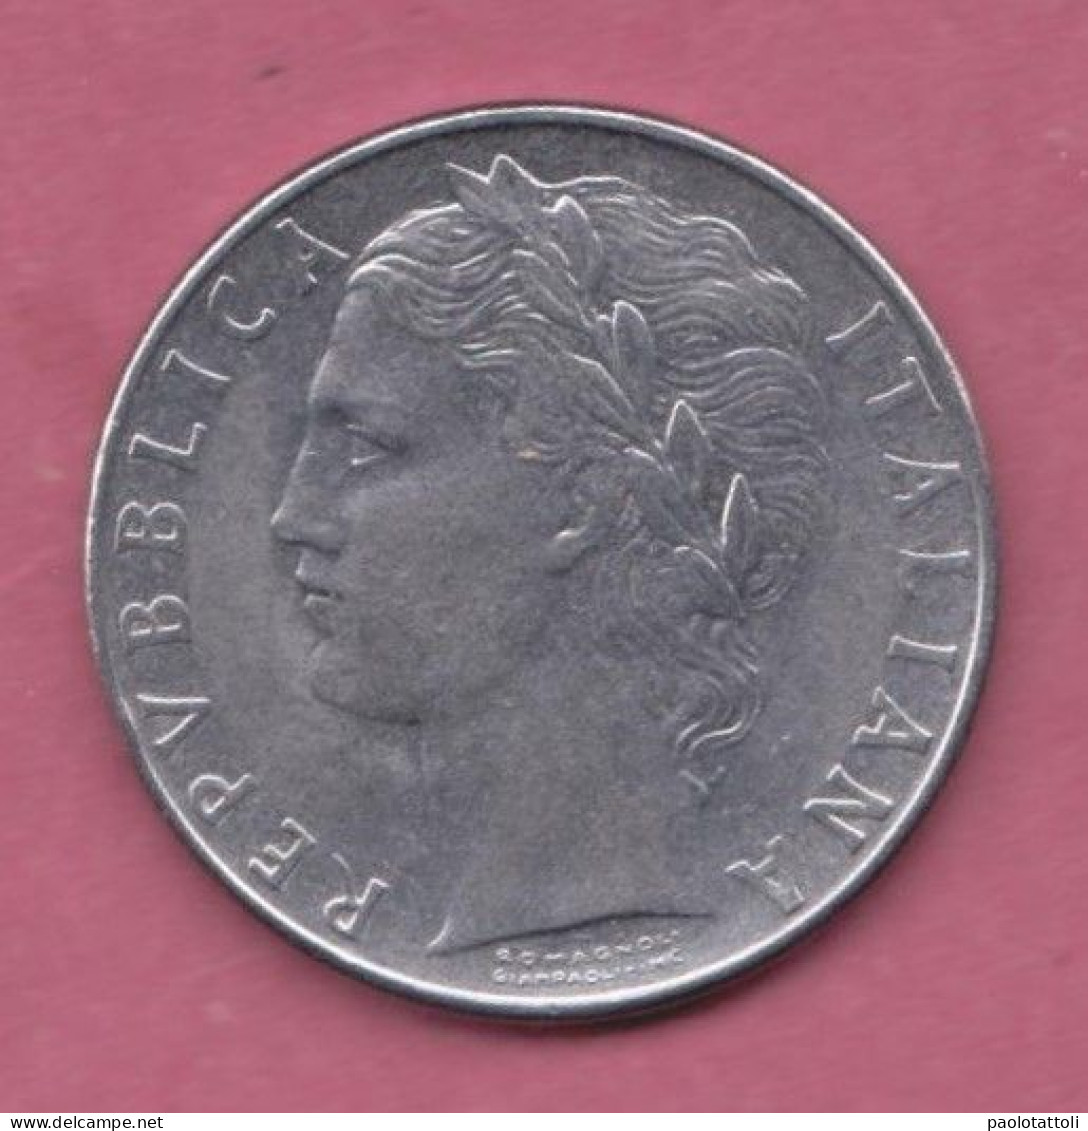 Italia, 1977- 100 Lire ( Large Type)- Acmonital- Obverse Allegory Of Italian Repubblic. Reverse Goddess Minerva- - 100 Liras